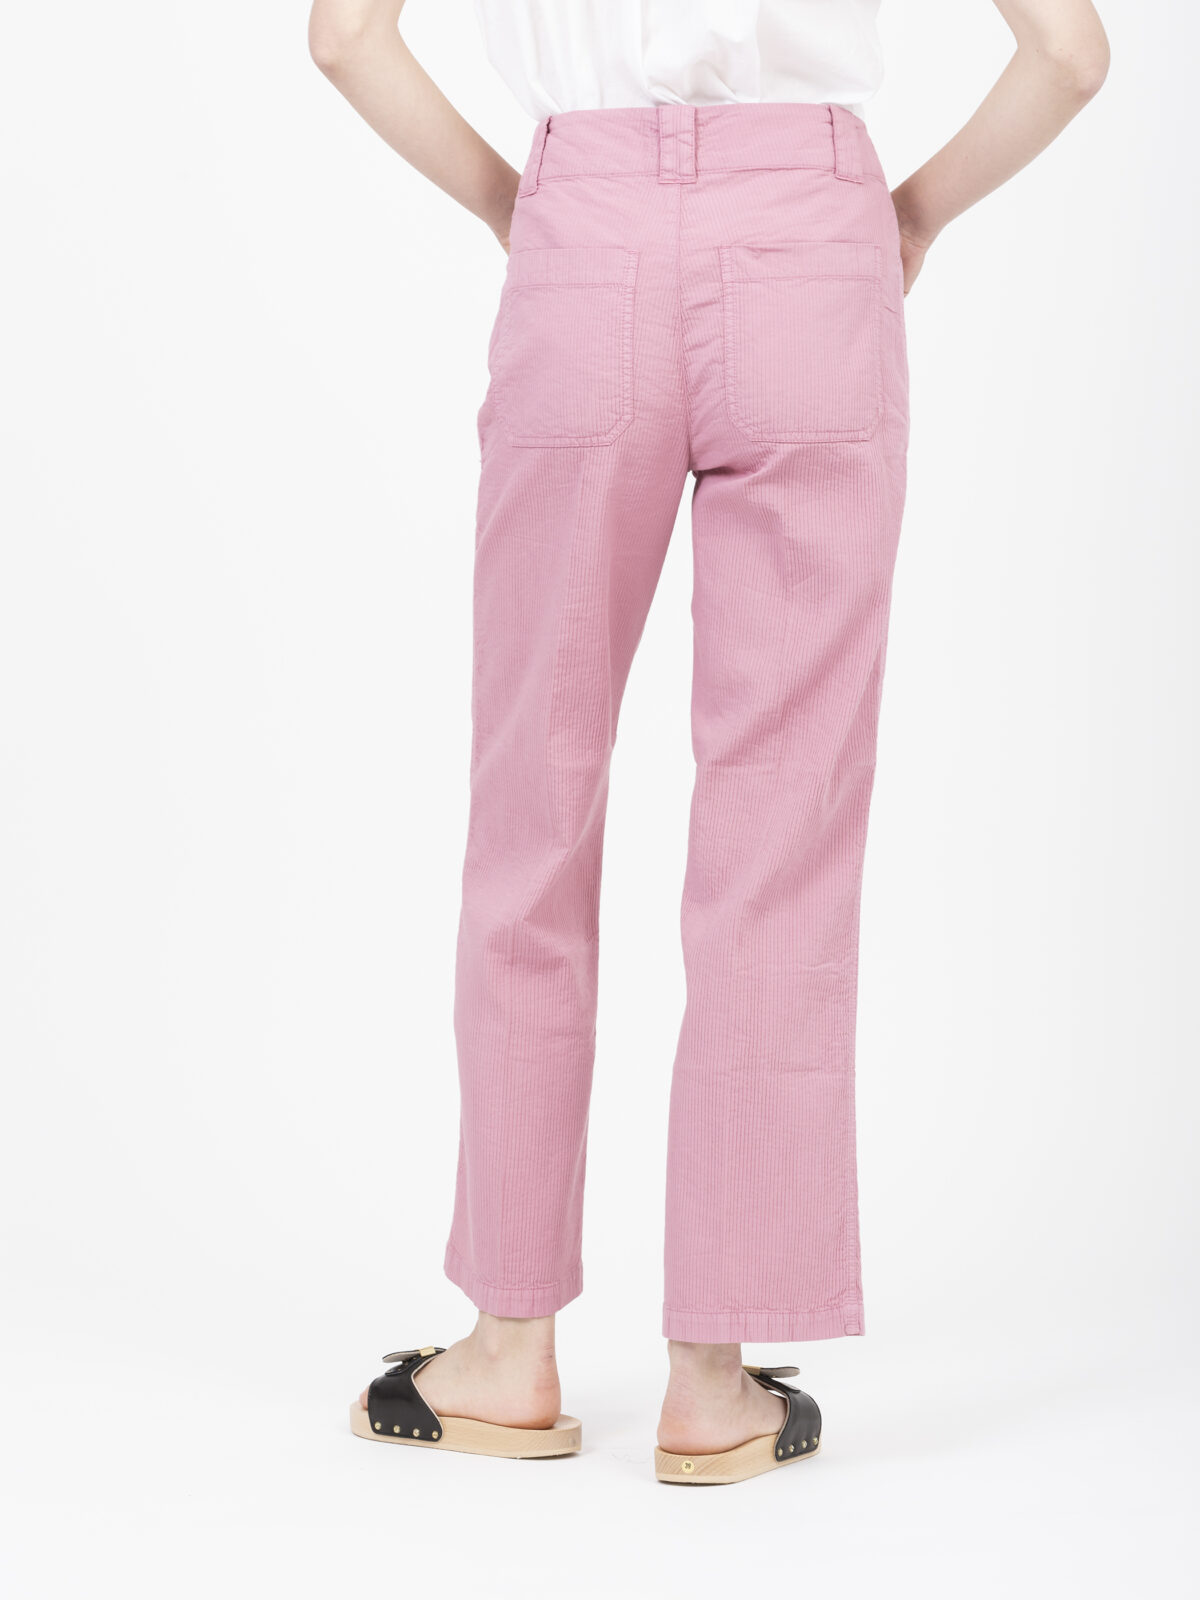 rico-rose-pants-cotton-striped-cargo-pockets-labdip-matchboxathens